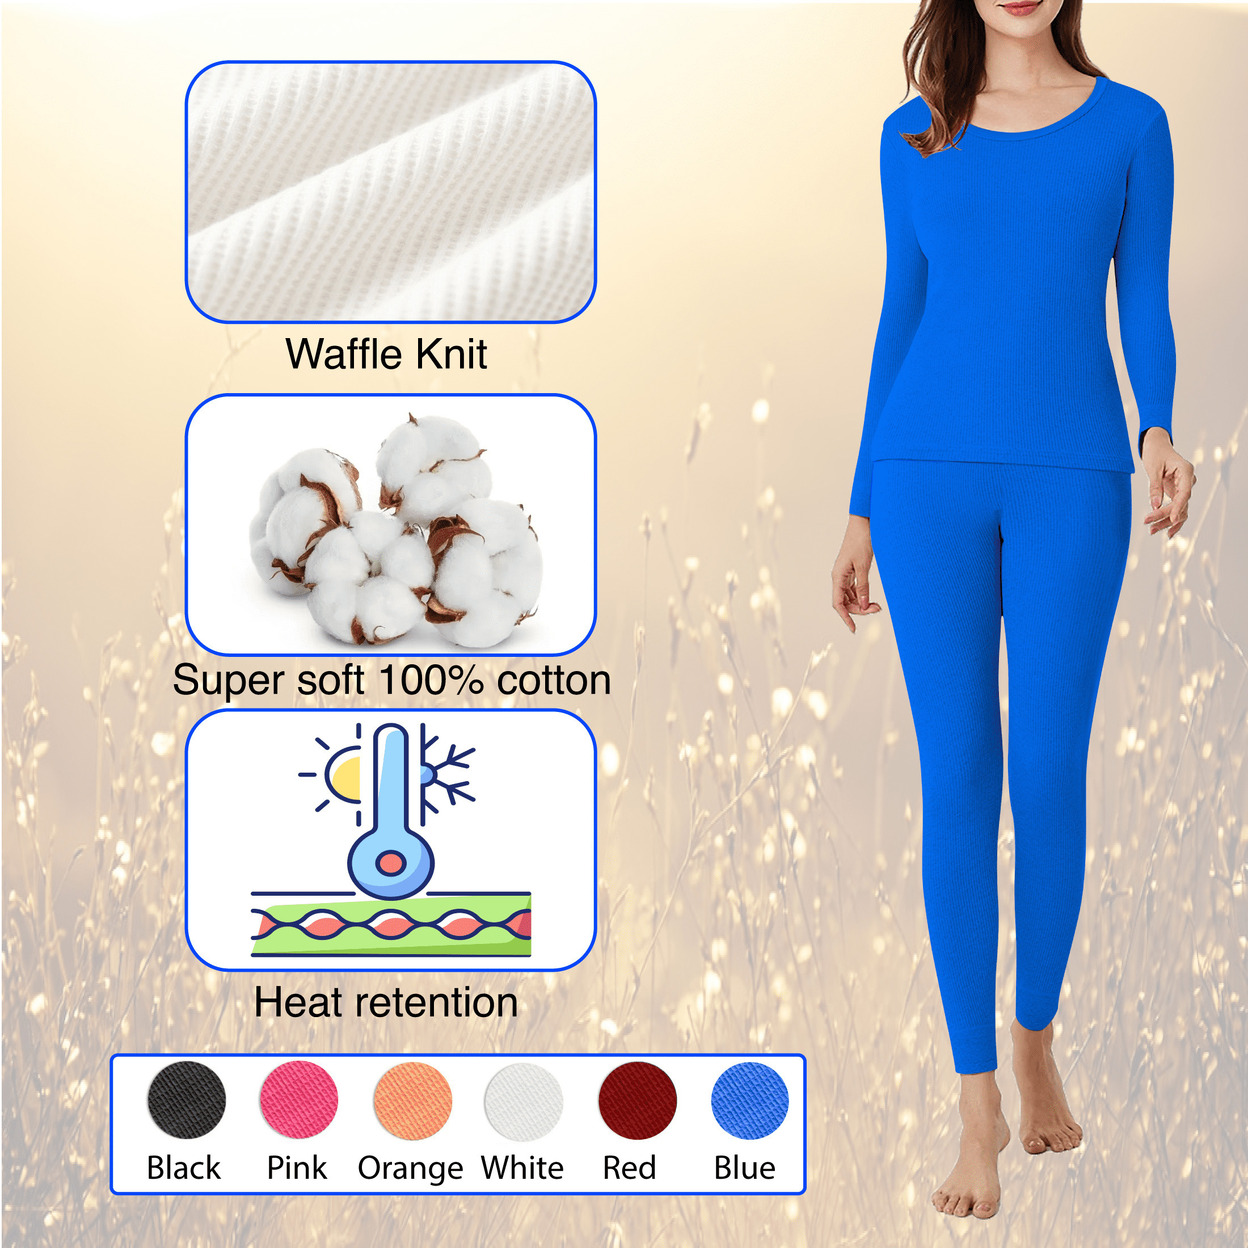 2-Piece: Women's Ultra Soft Cotton Waffle Knit Thermal Sets - White, X-large